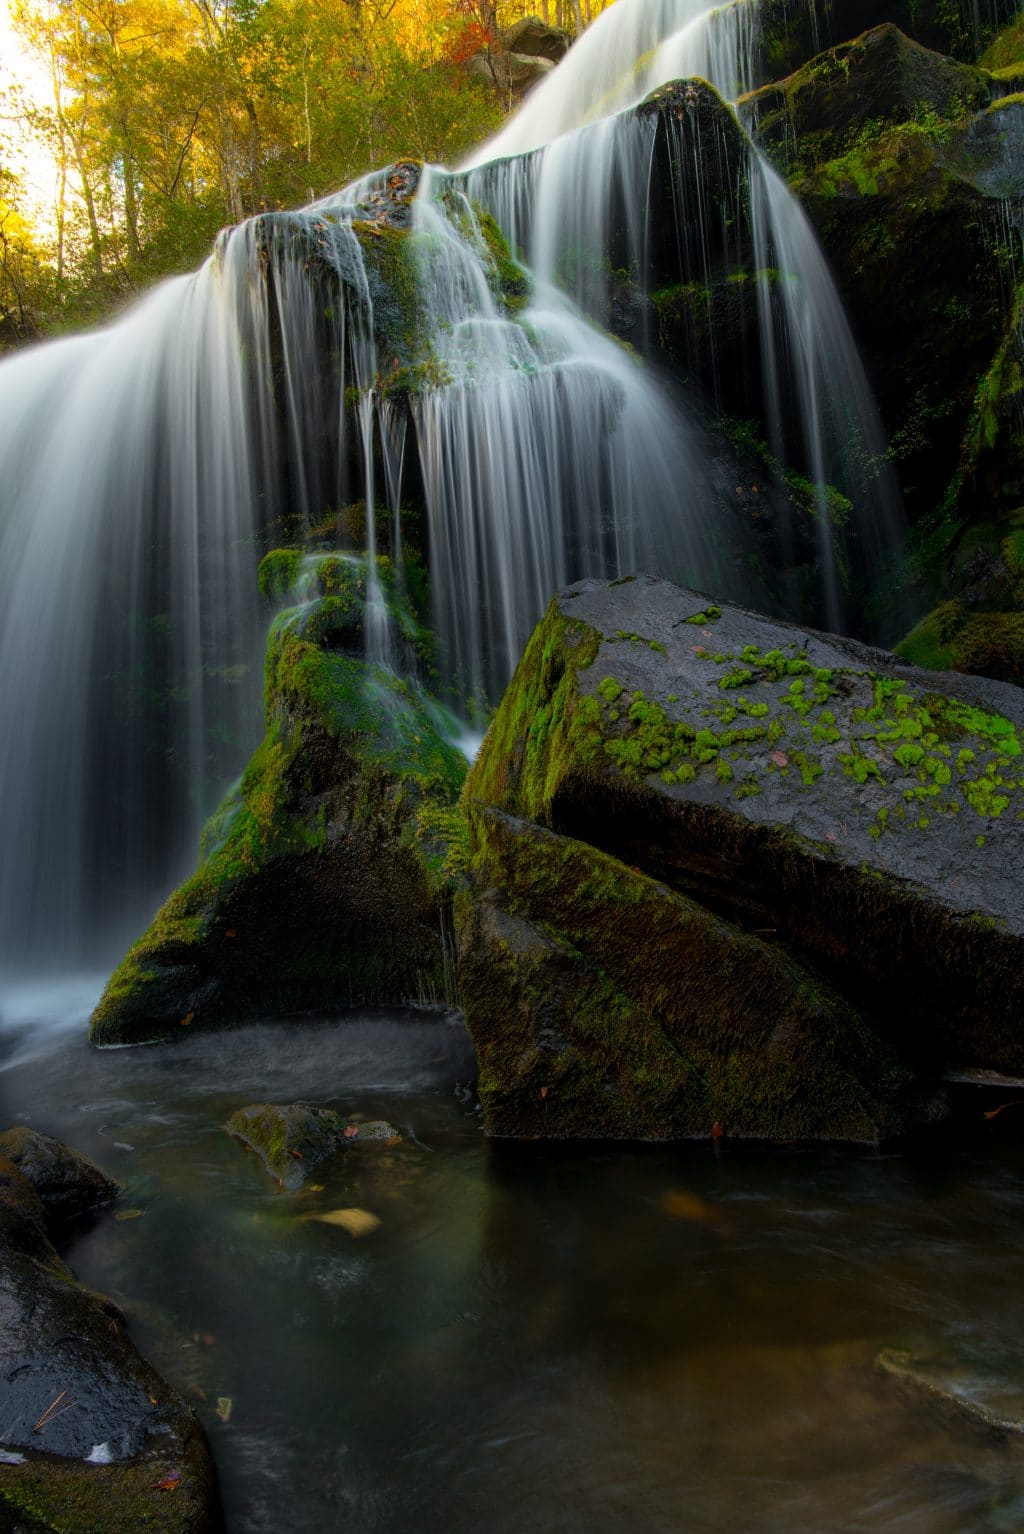 Waterfall over mossy rocks